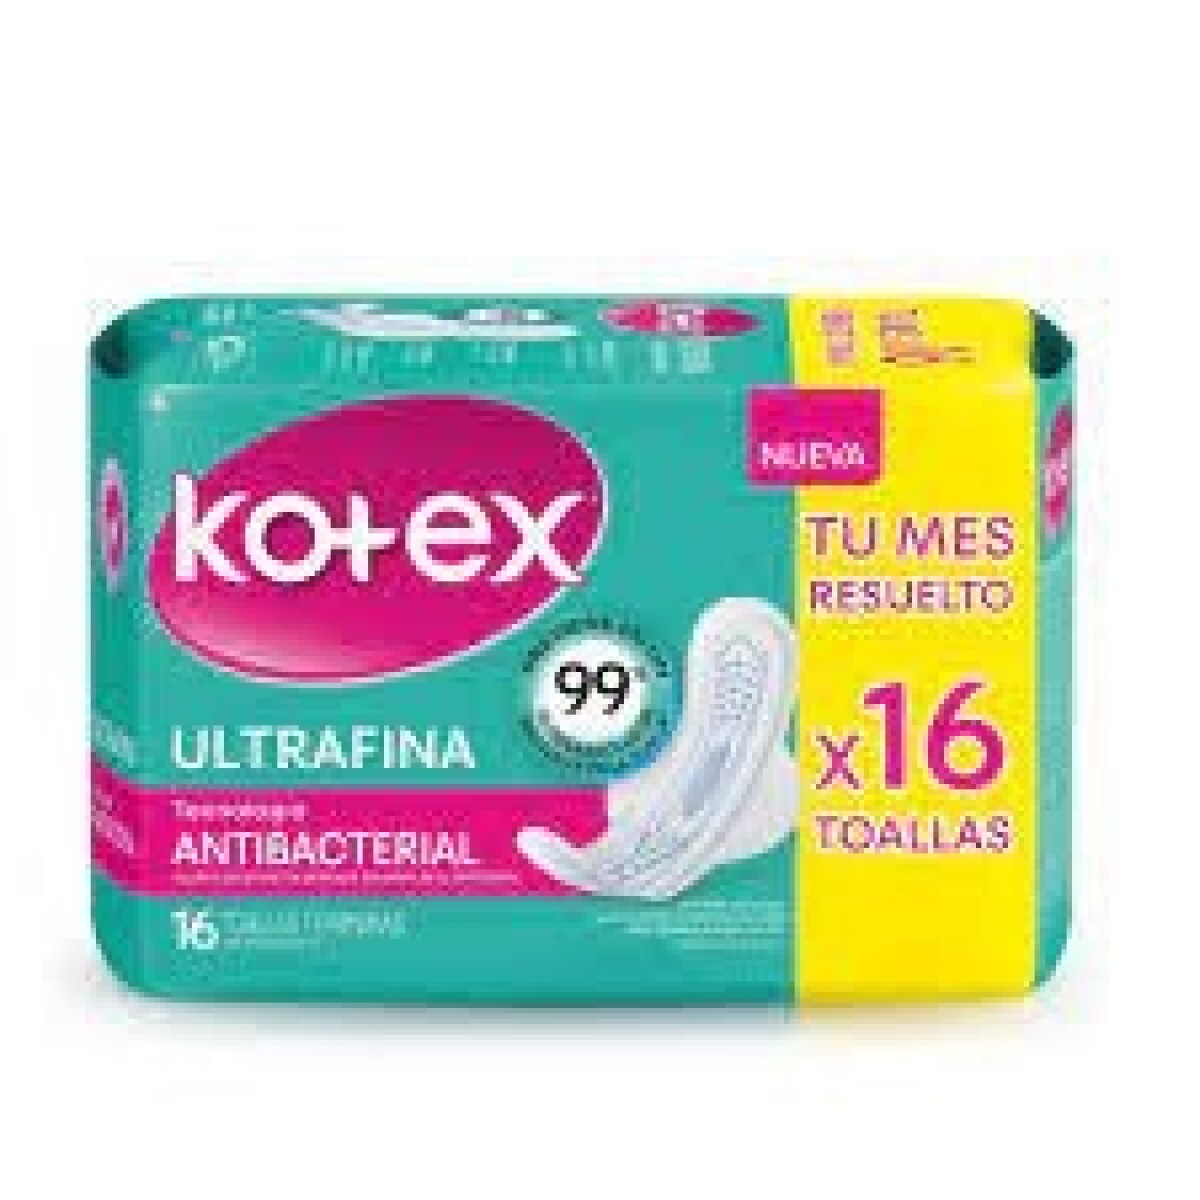 Toallitas Femeninas Kotex Ultrafina Antibacterial 16 Uds. 